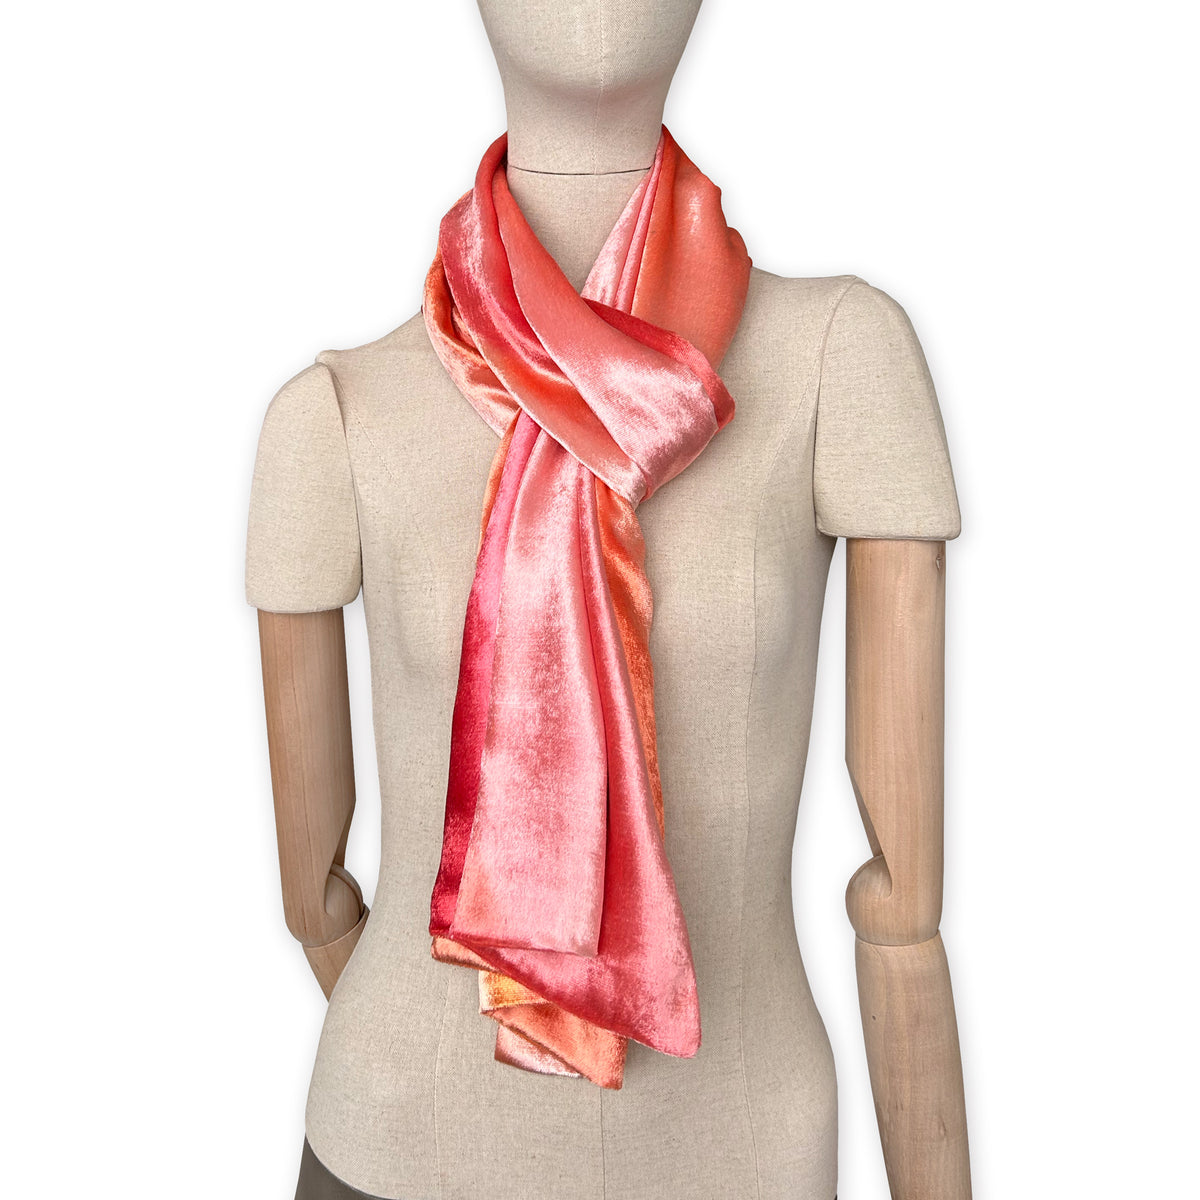 velvet-scarf-hand-painted-188x31cm-red-coral-orange-otta-italy-2425